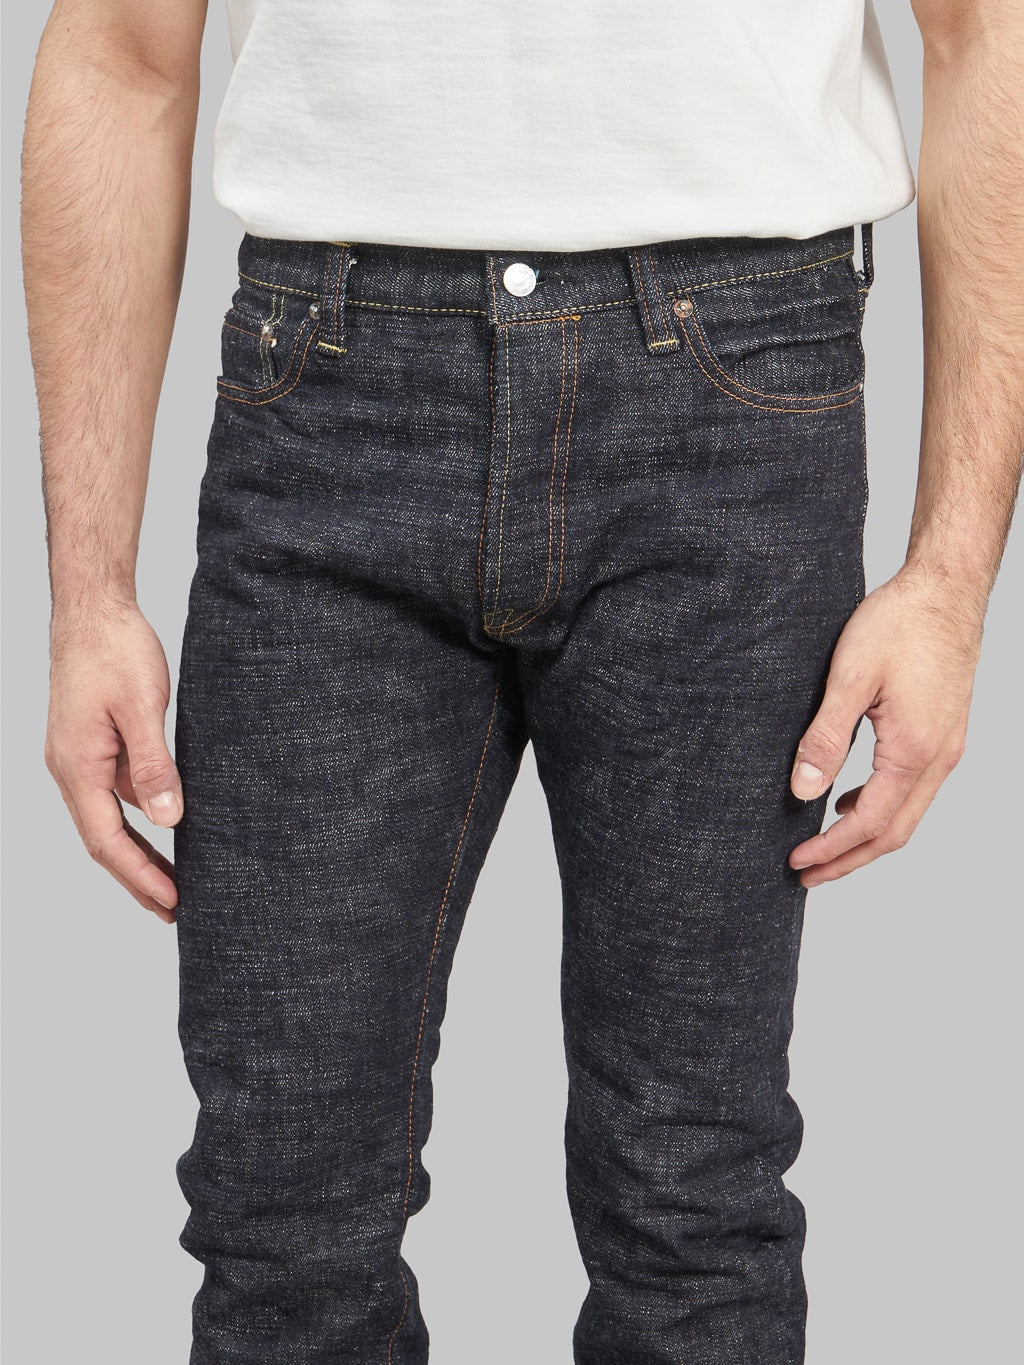 The Strike Gold 7109 Ultra Slubby Slim Tapered Jeans waist